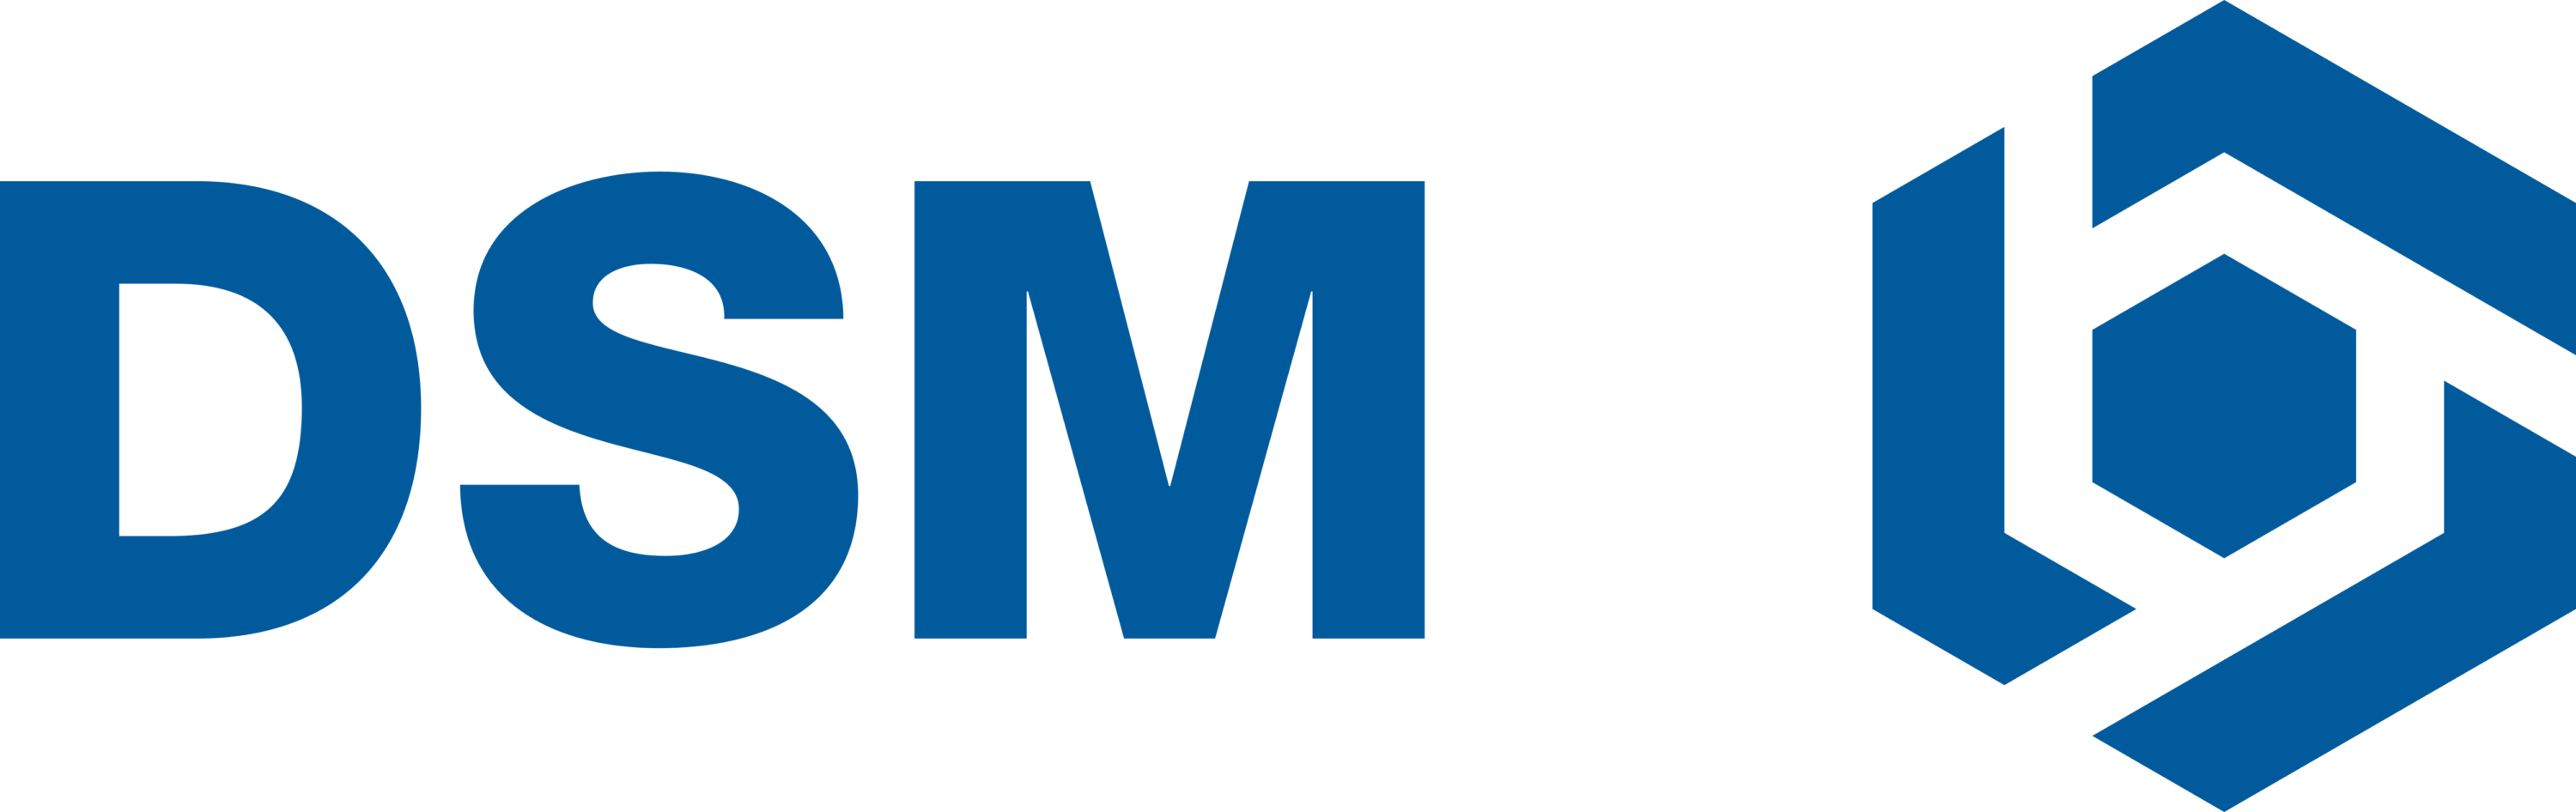 Koninklijke DSM N.V. Logo old